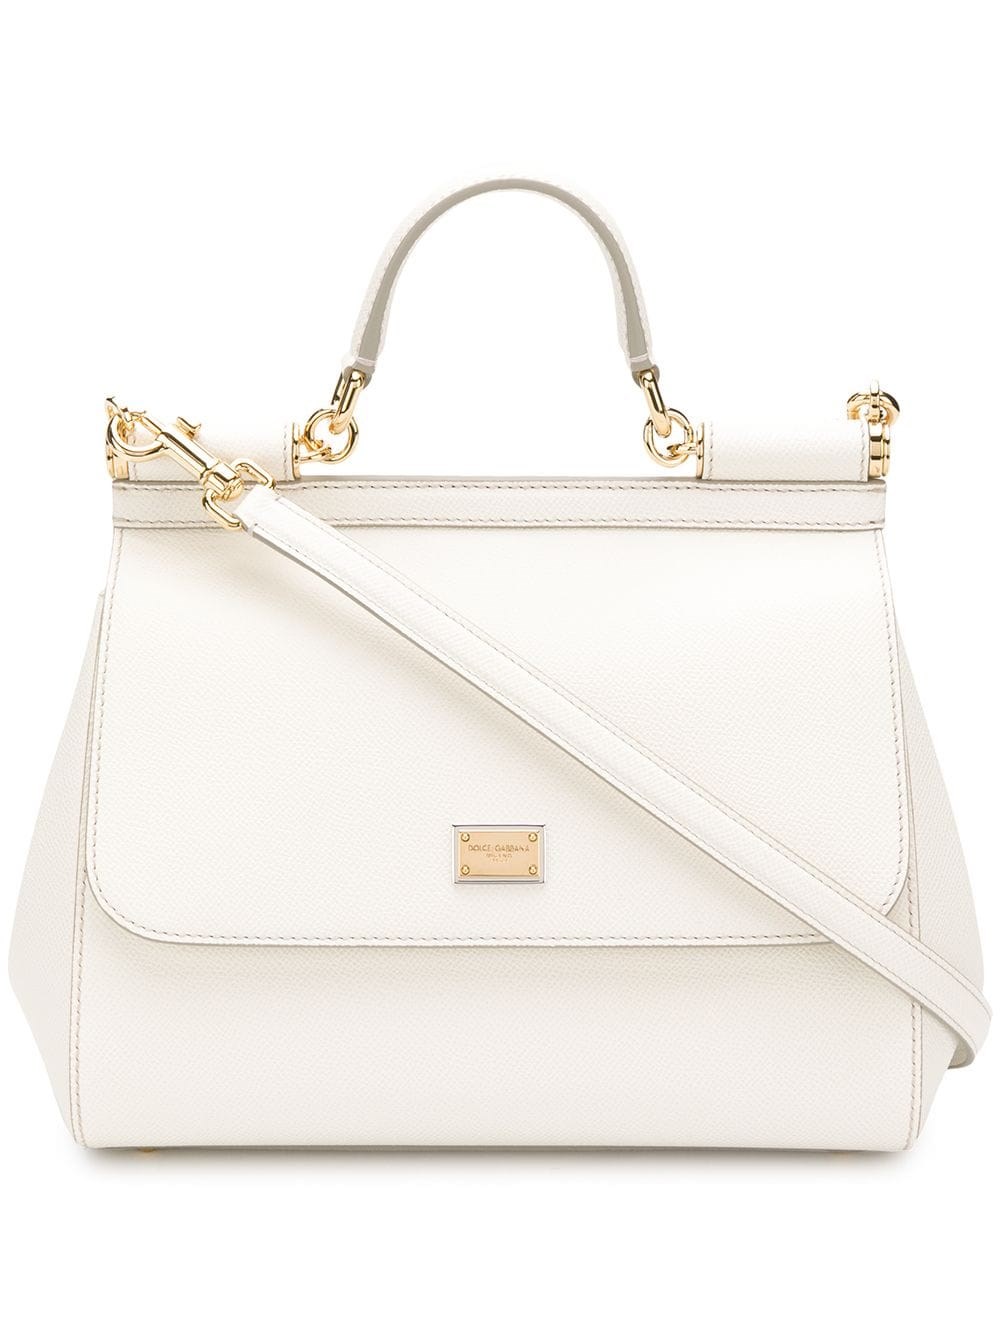 Dolce & Gabbana Small Sicily Shoulder Bag In White